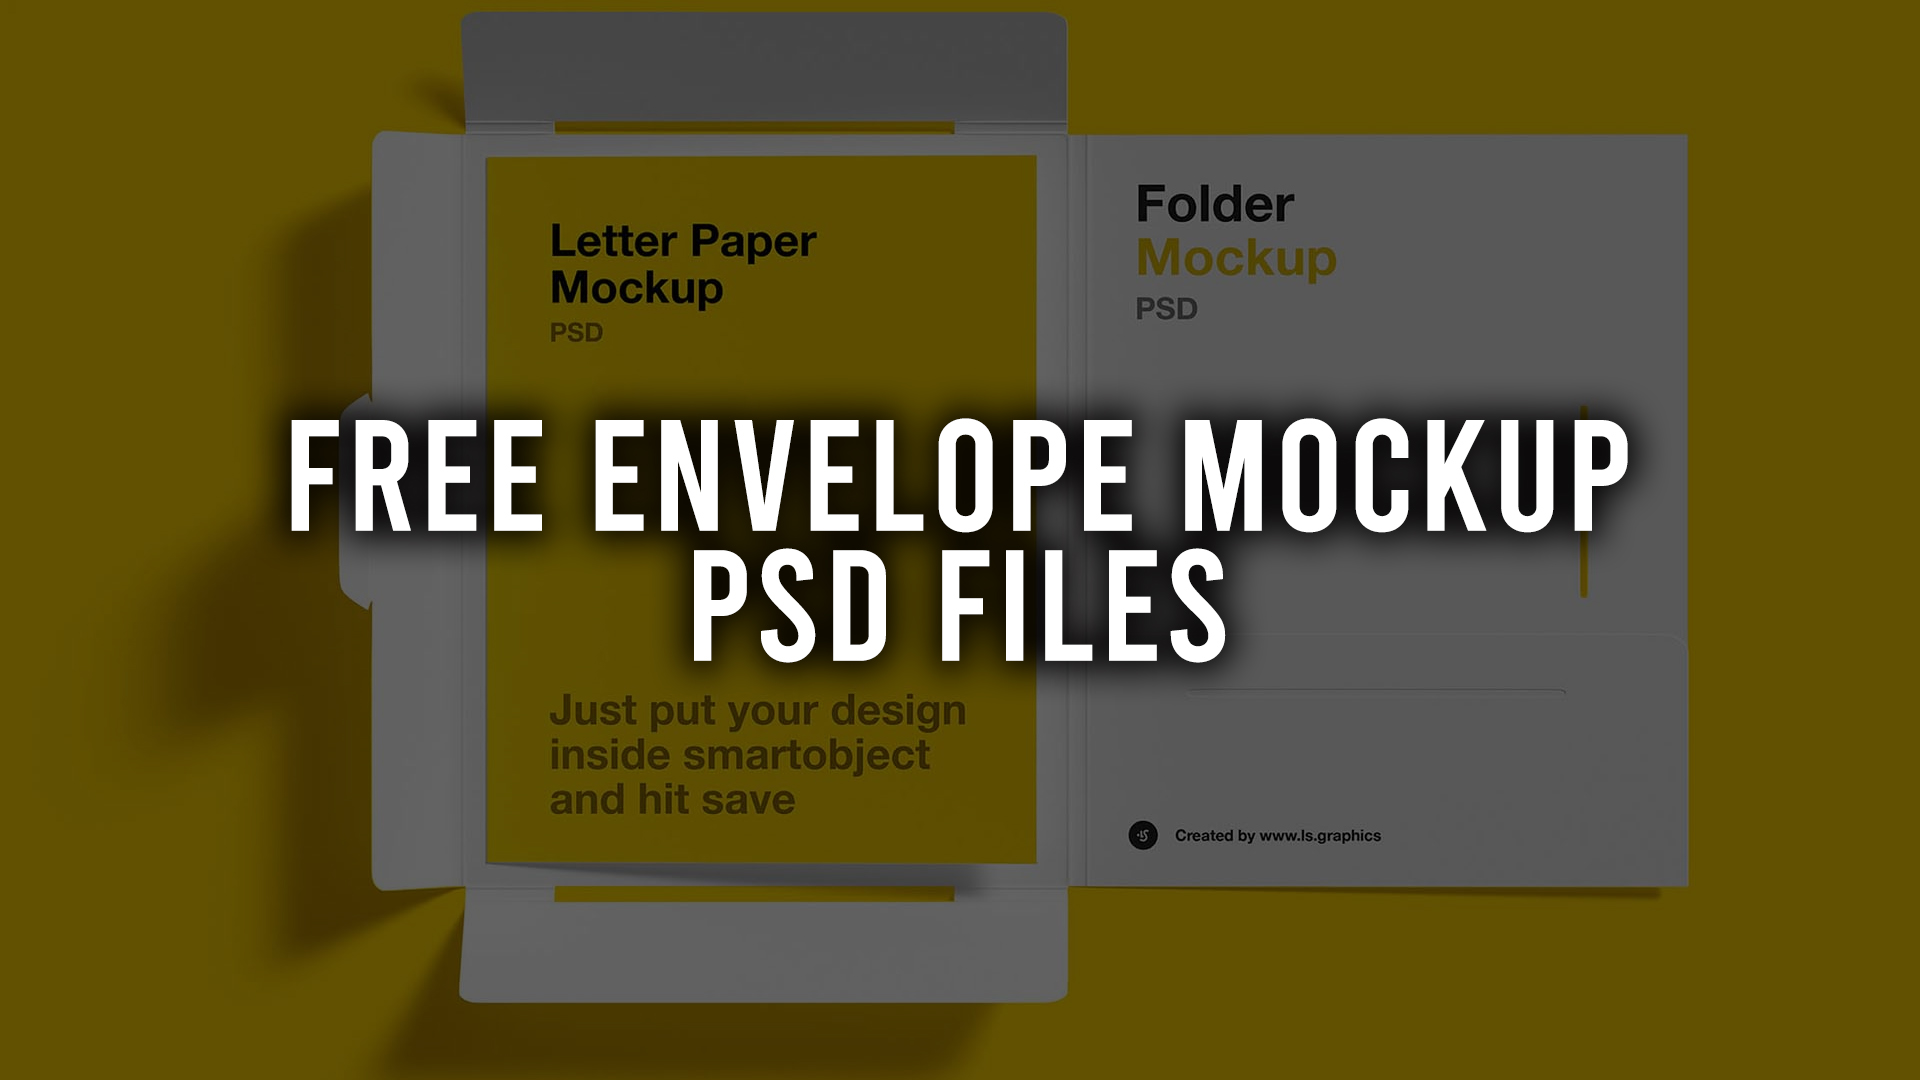 Free Envelope Mockup PSD Files